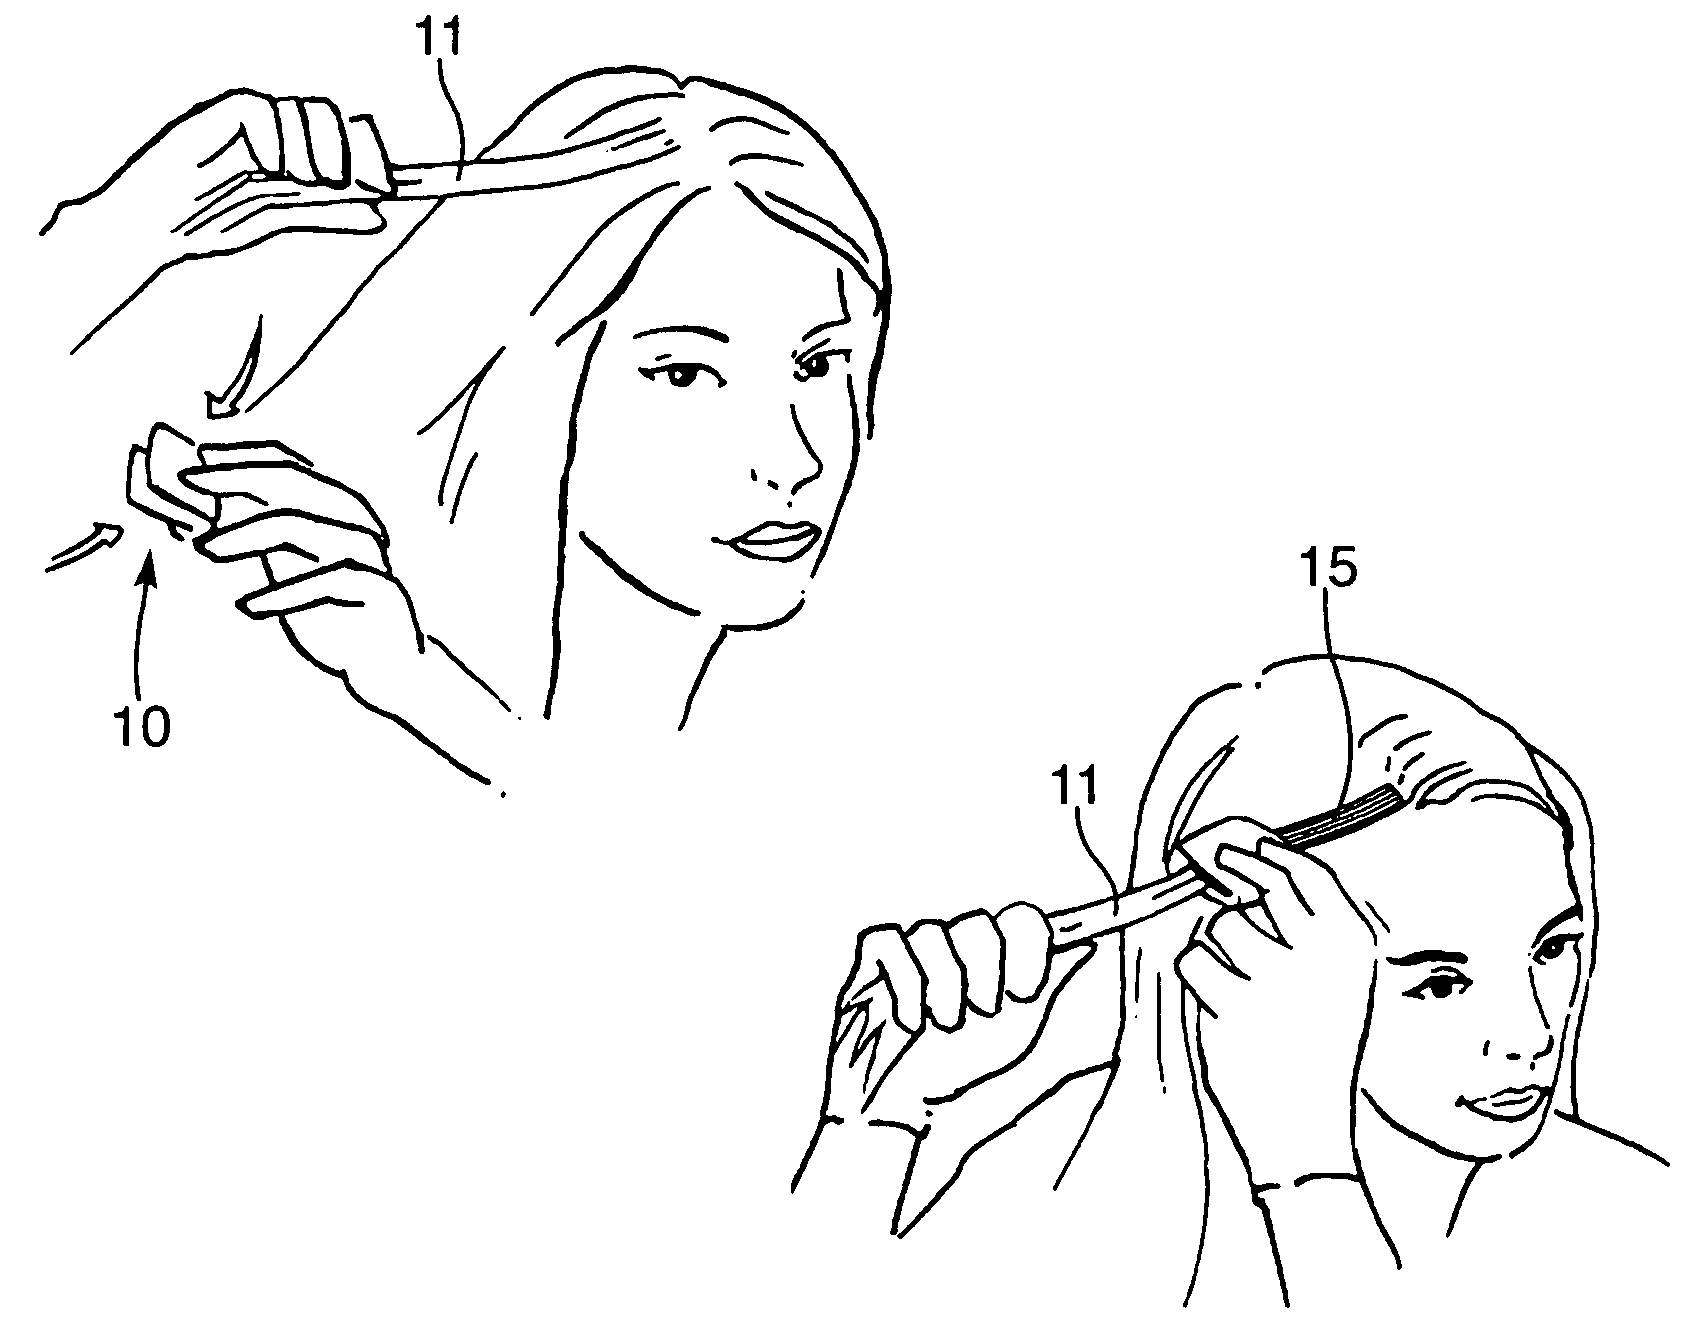 Hair treatment application system